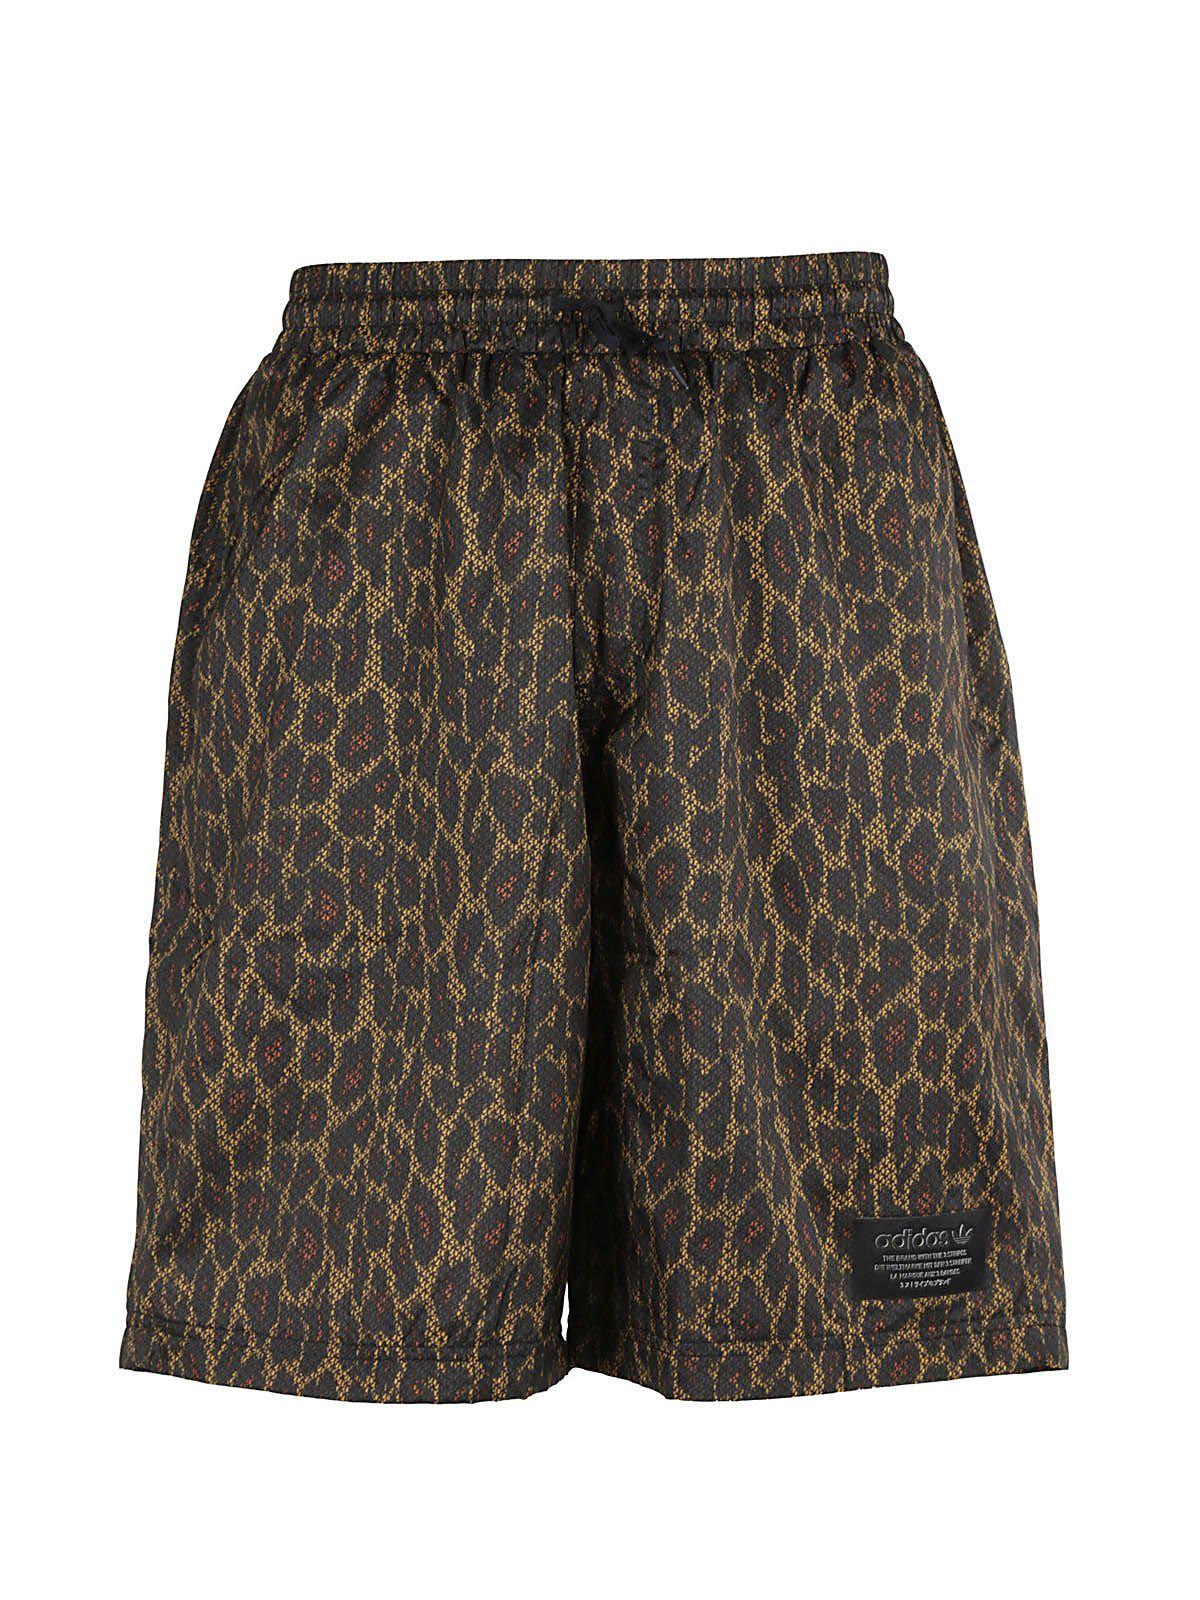 adidas Originals Leopard Nmd Shorts for Men | Lyst